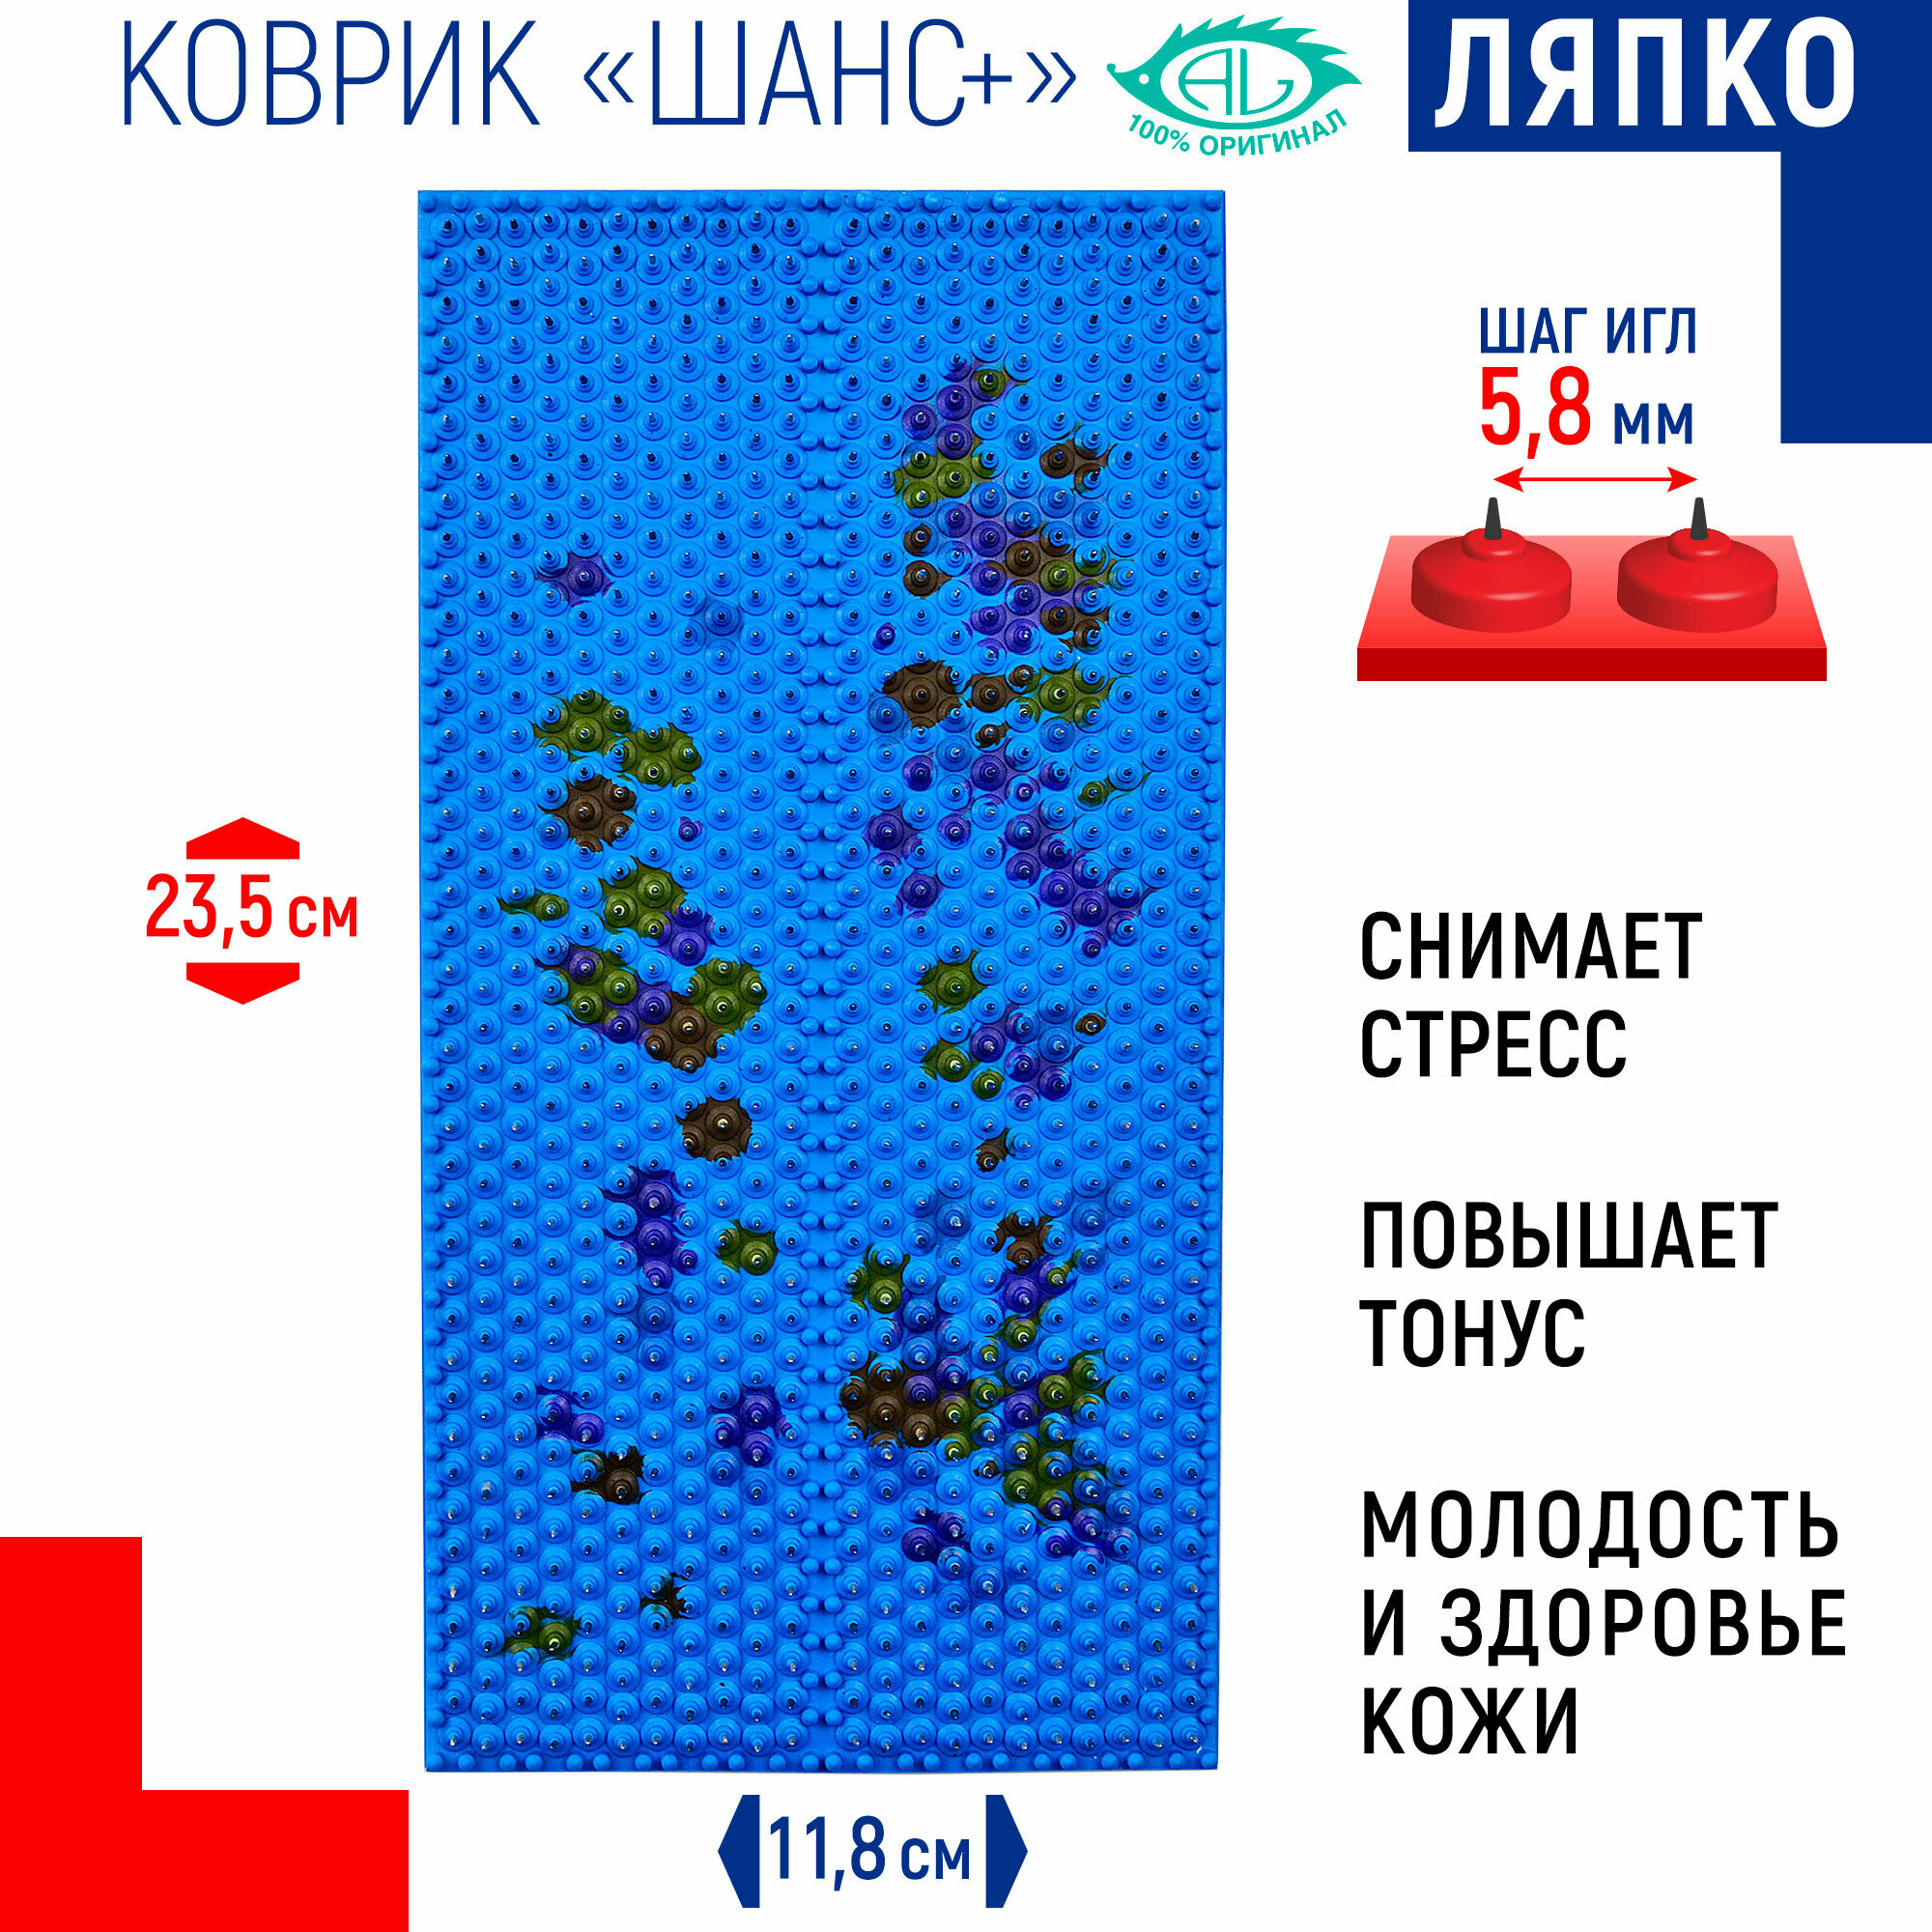 Массажер коврик аппликатор Ляпко Шанс, шаг игл 5.8 мм (23.5х11.8 см)